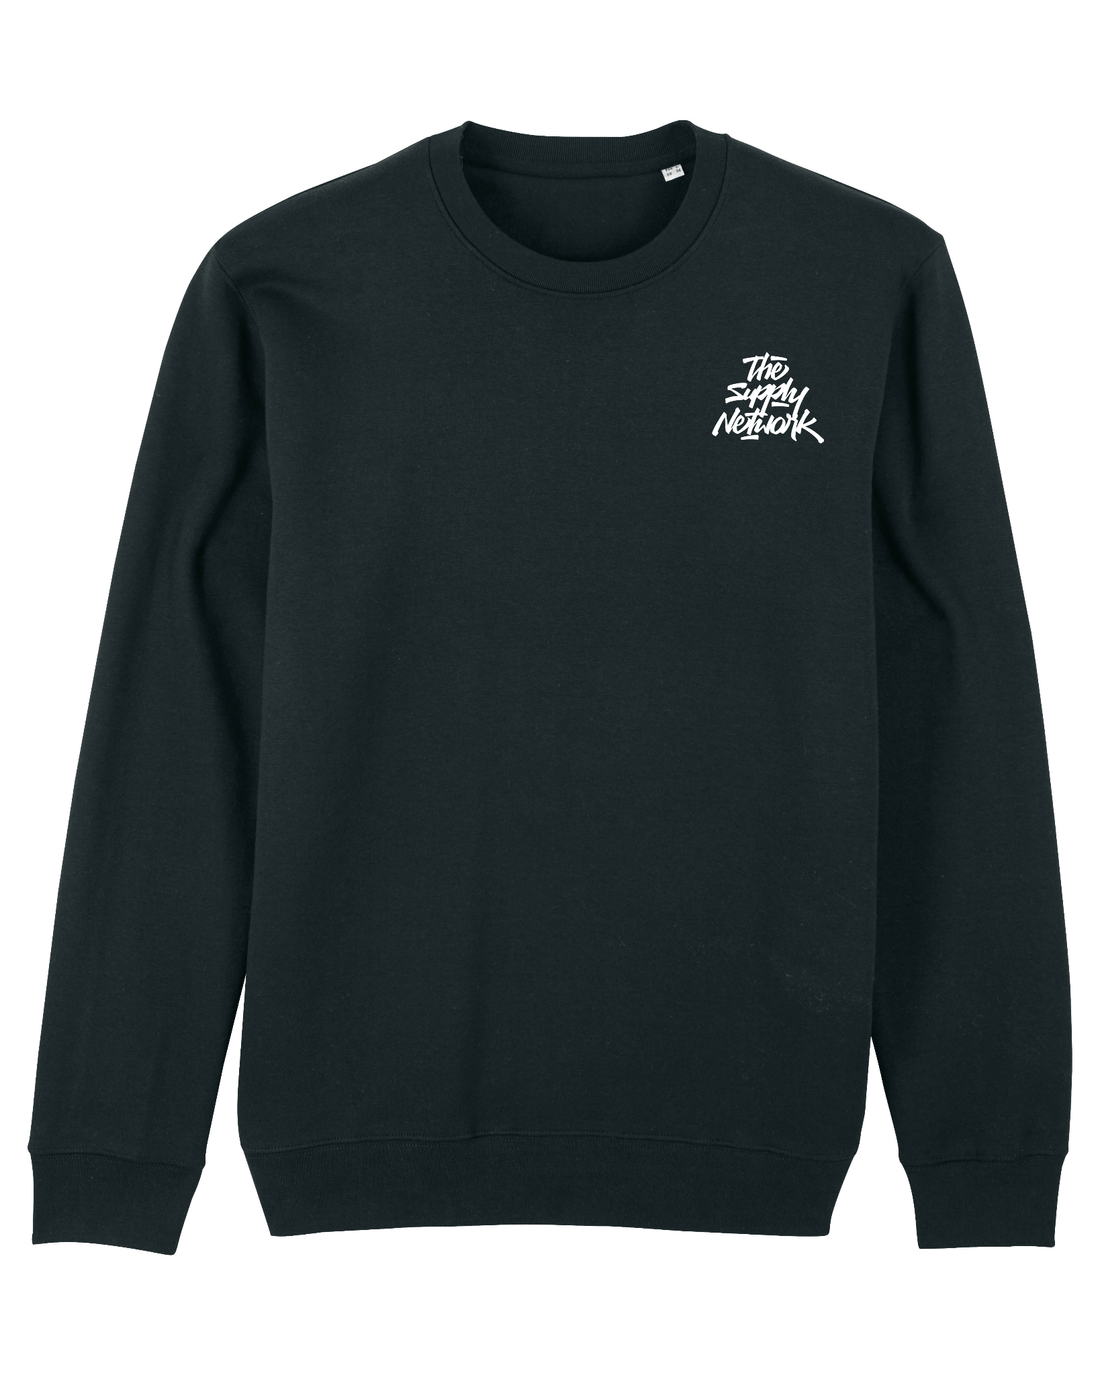 Black Skater Sweatshirt, The Supply Network Front Print